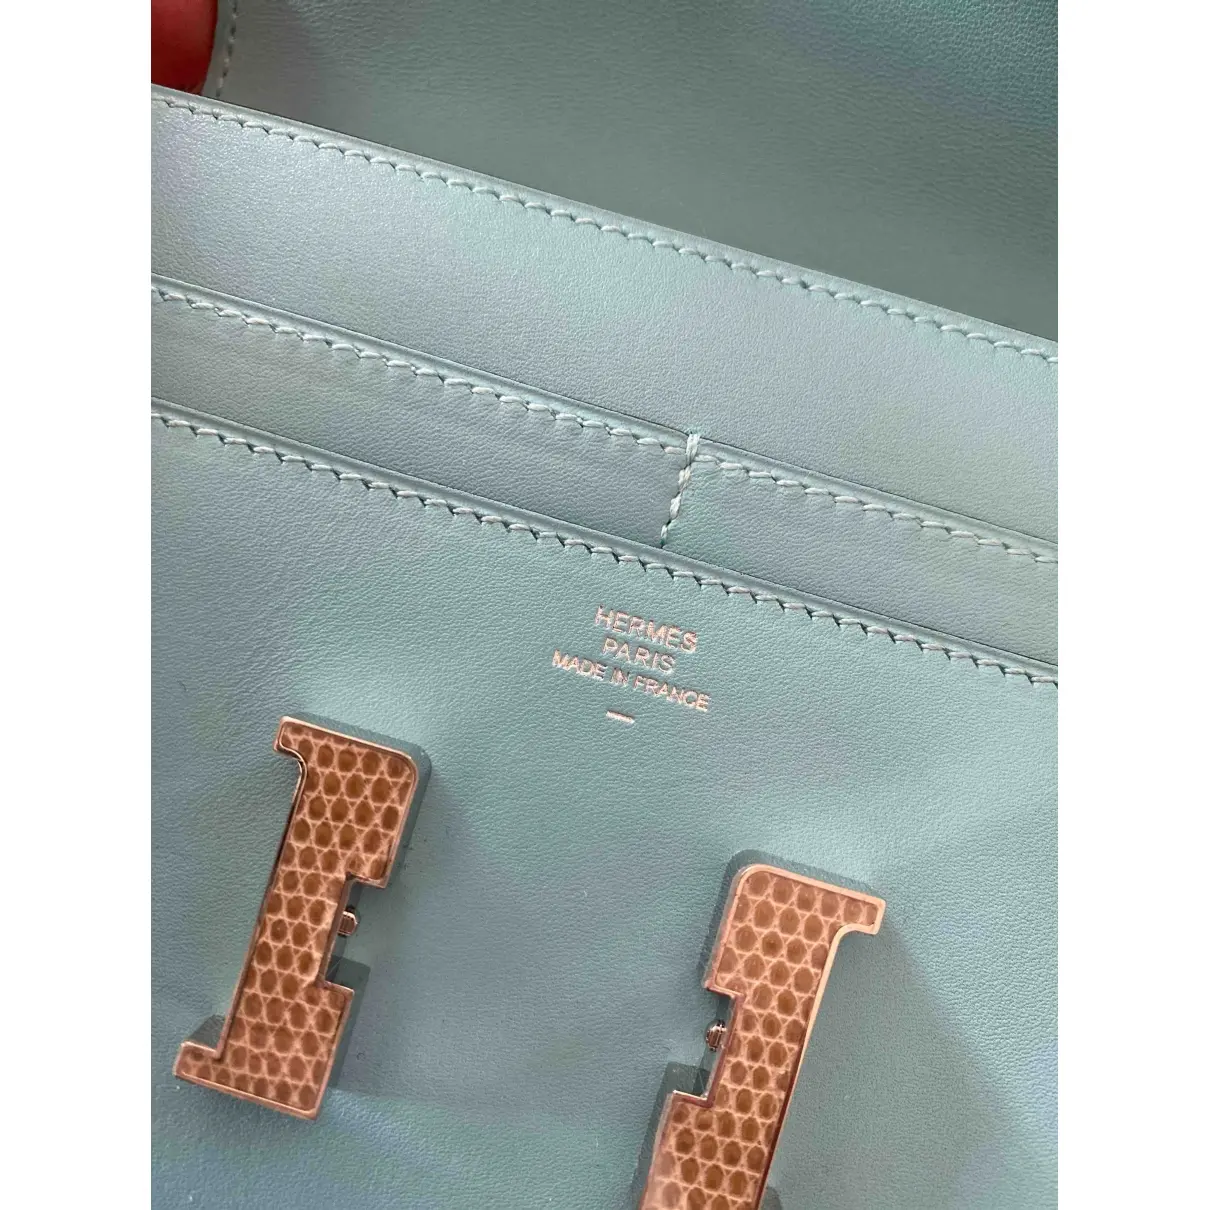 Buy Hermès Constance leather wallet online